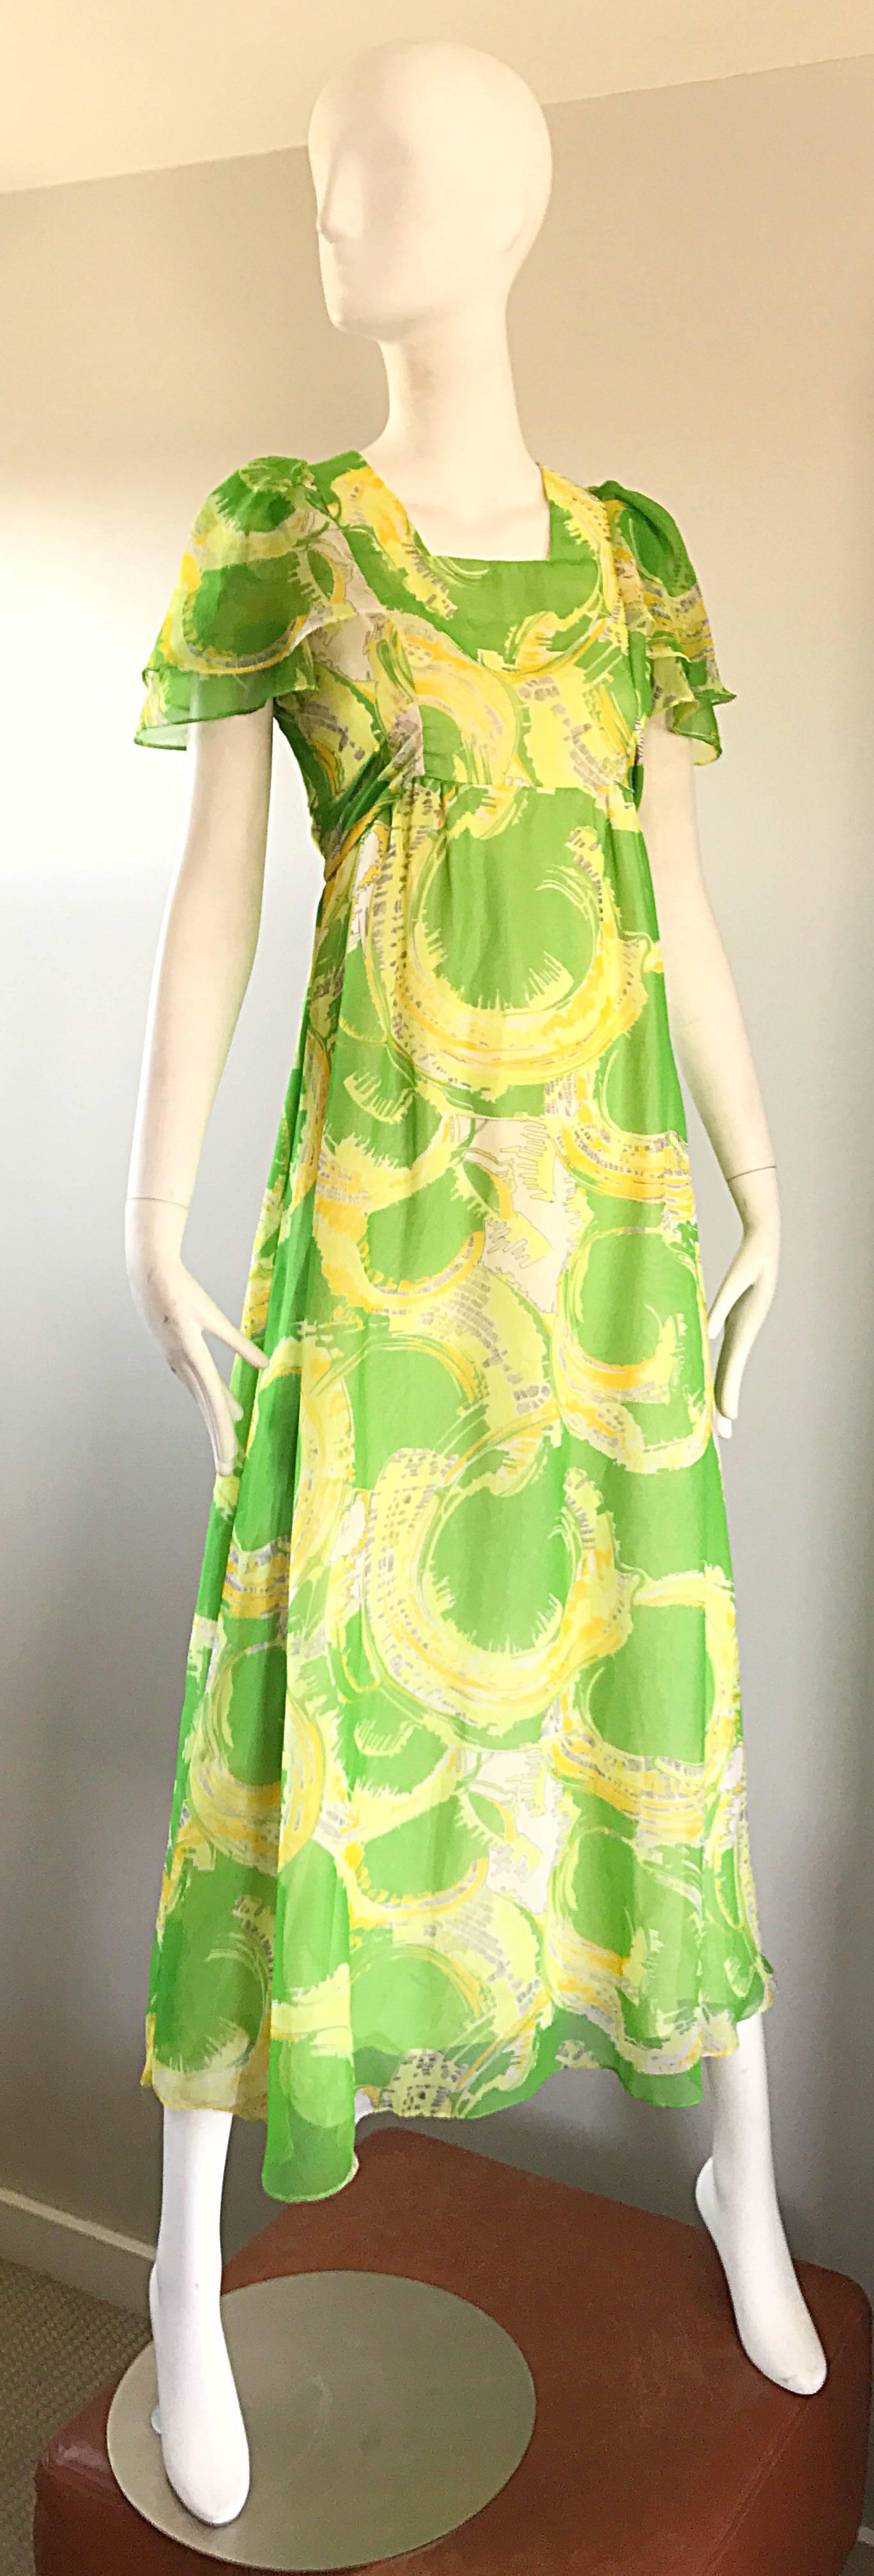 70s green dress